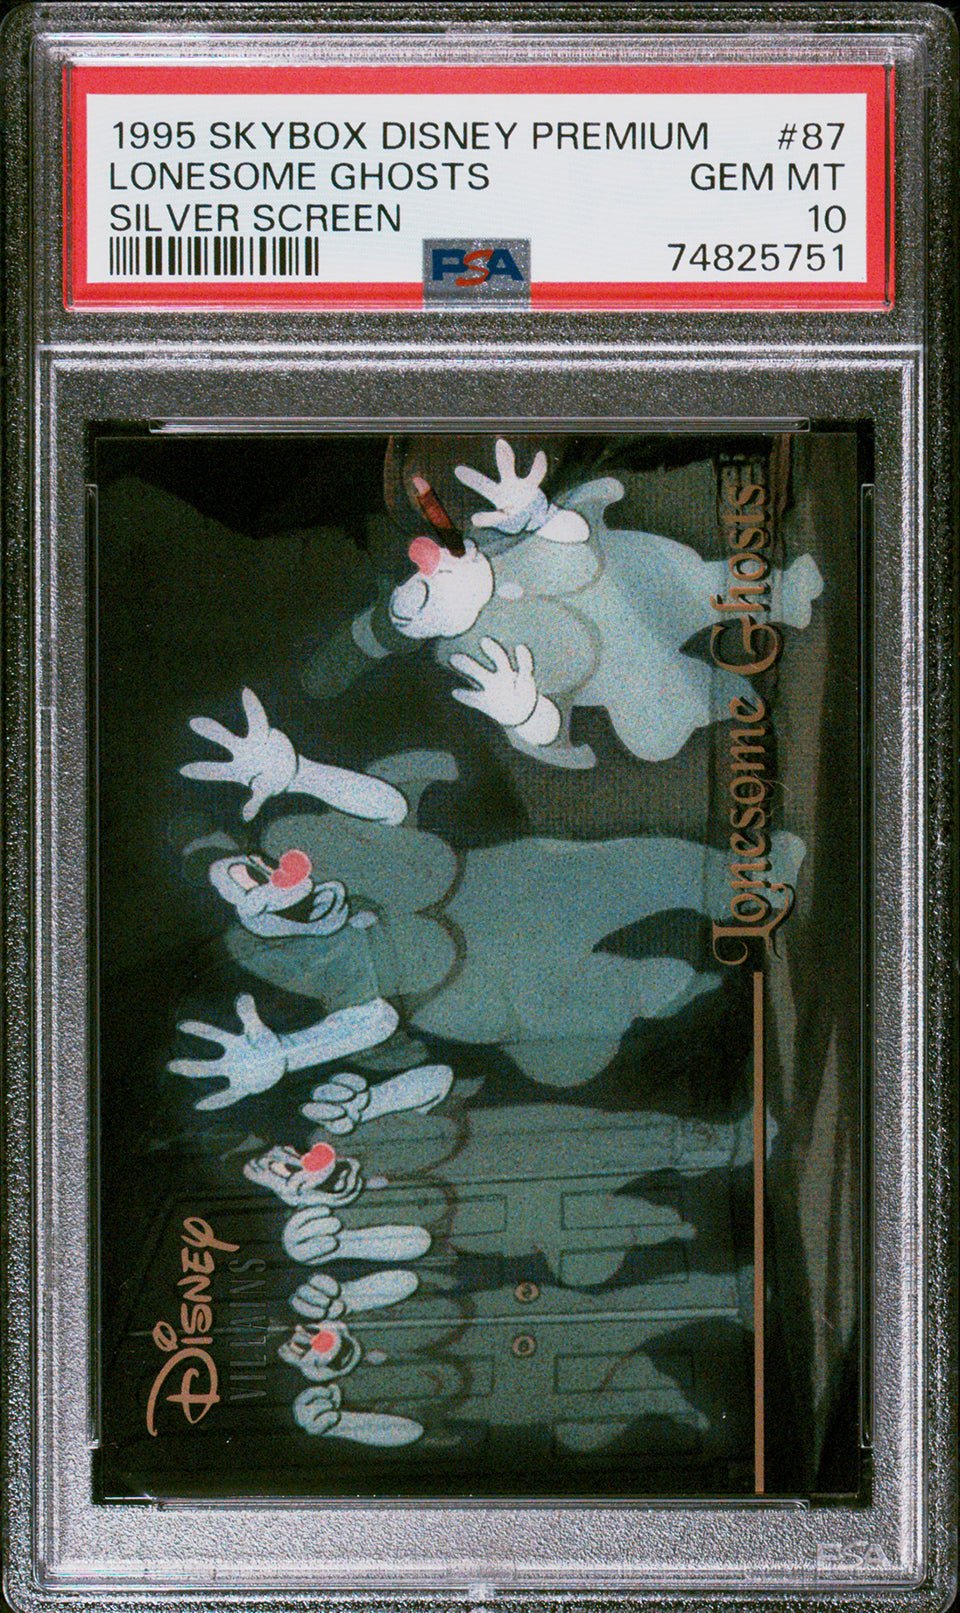 LONESOME GHOSTS PSA 10 1995 Skybox Disney Premium Silver Screen #87 C1 Disney Graded Cards Insert - Hobby Gems